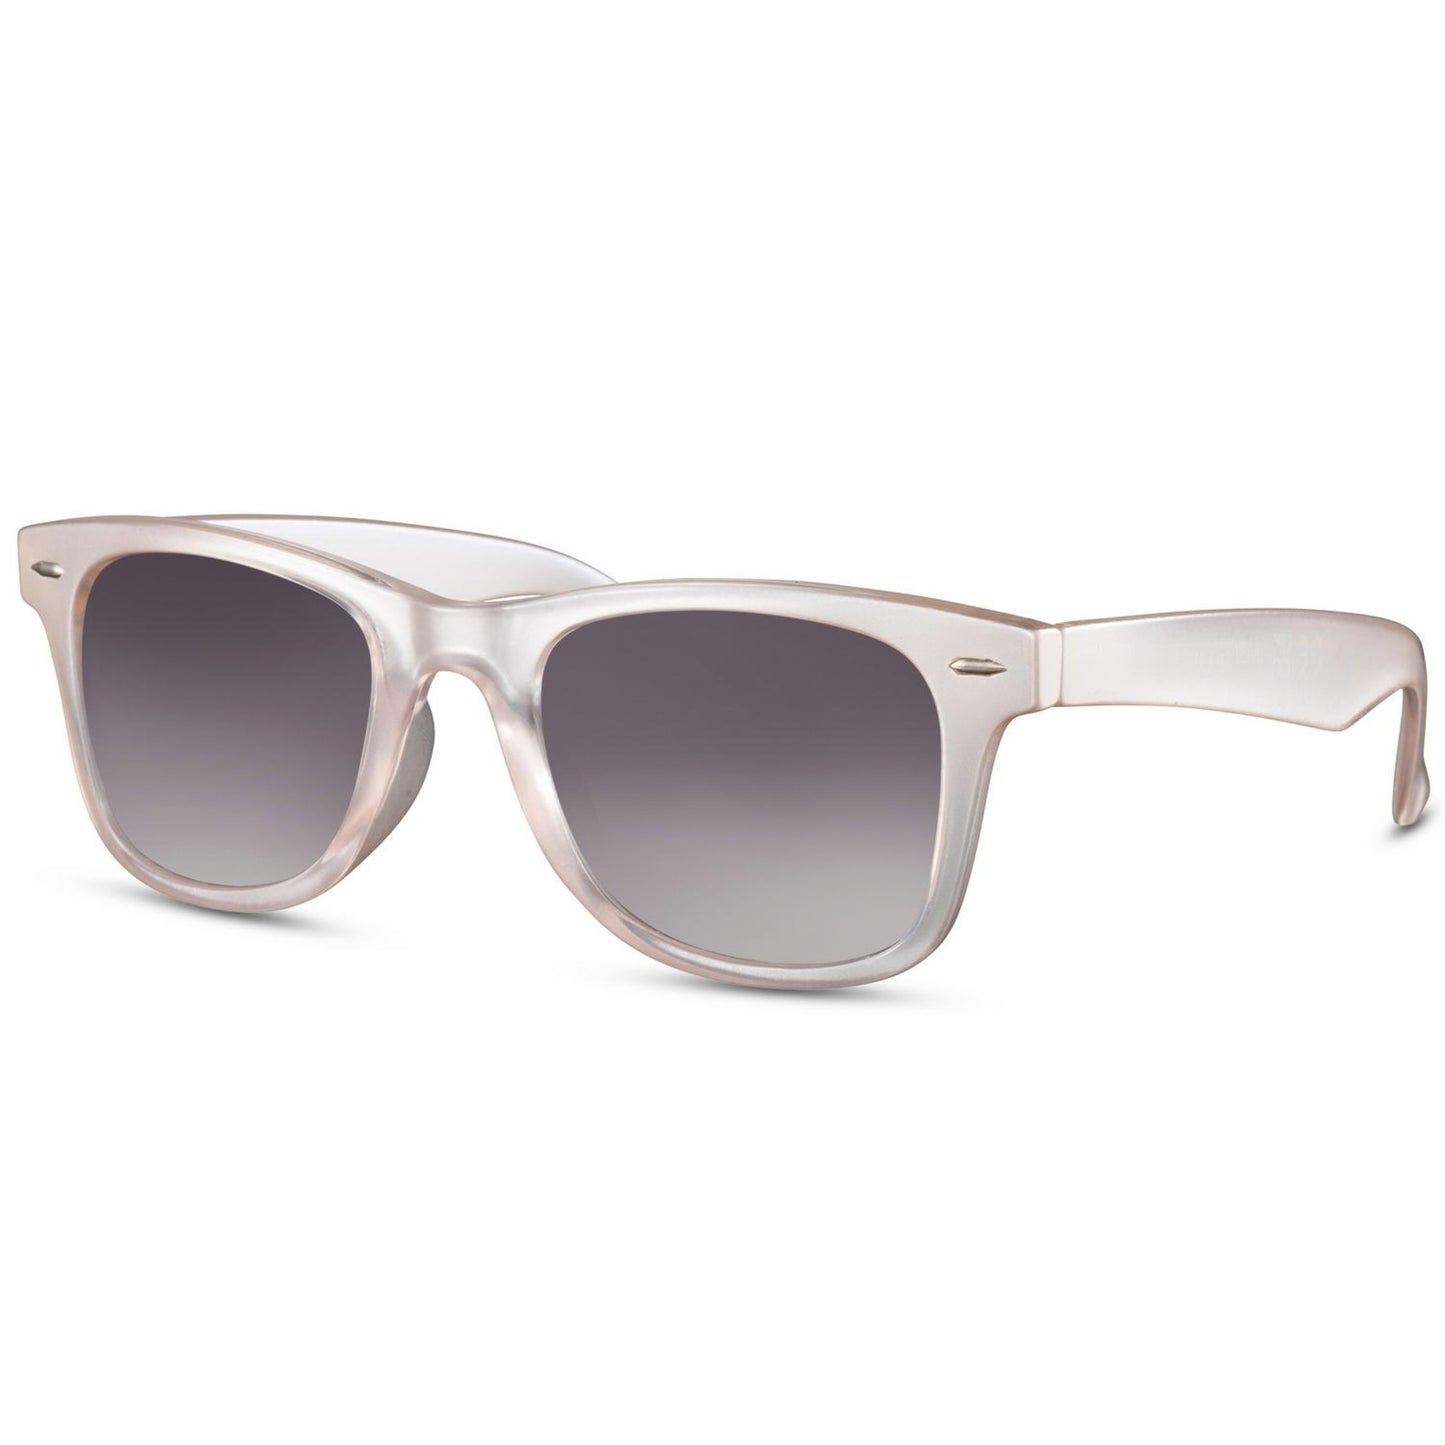 Nevada - Sunglasses - Exposure Sunglasses - NDL6185